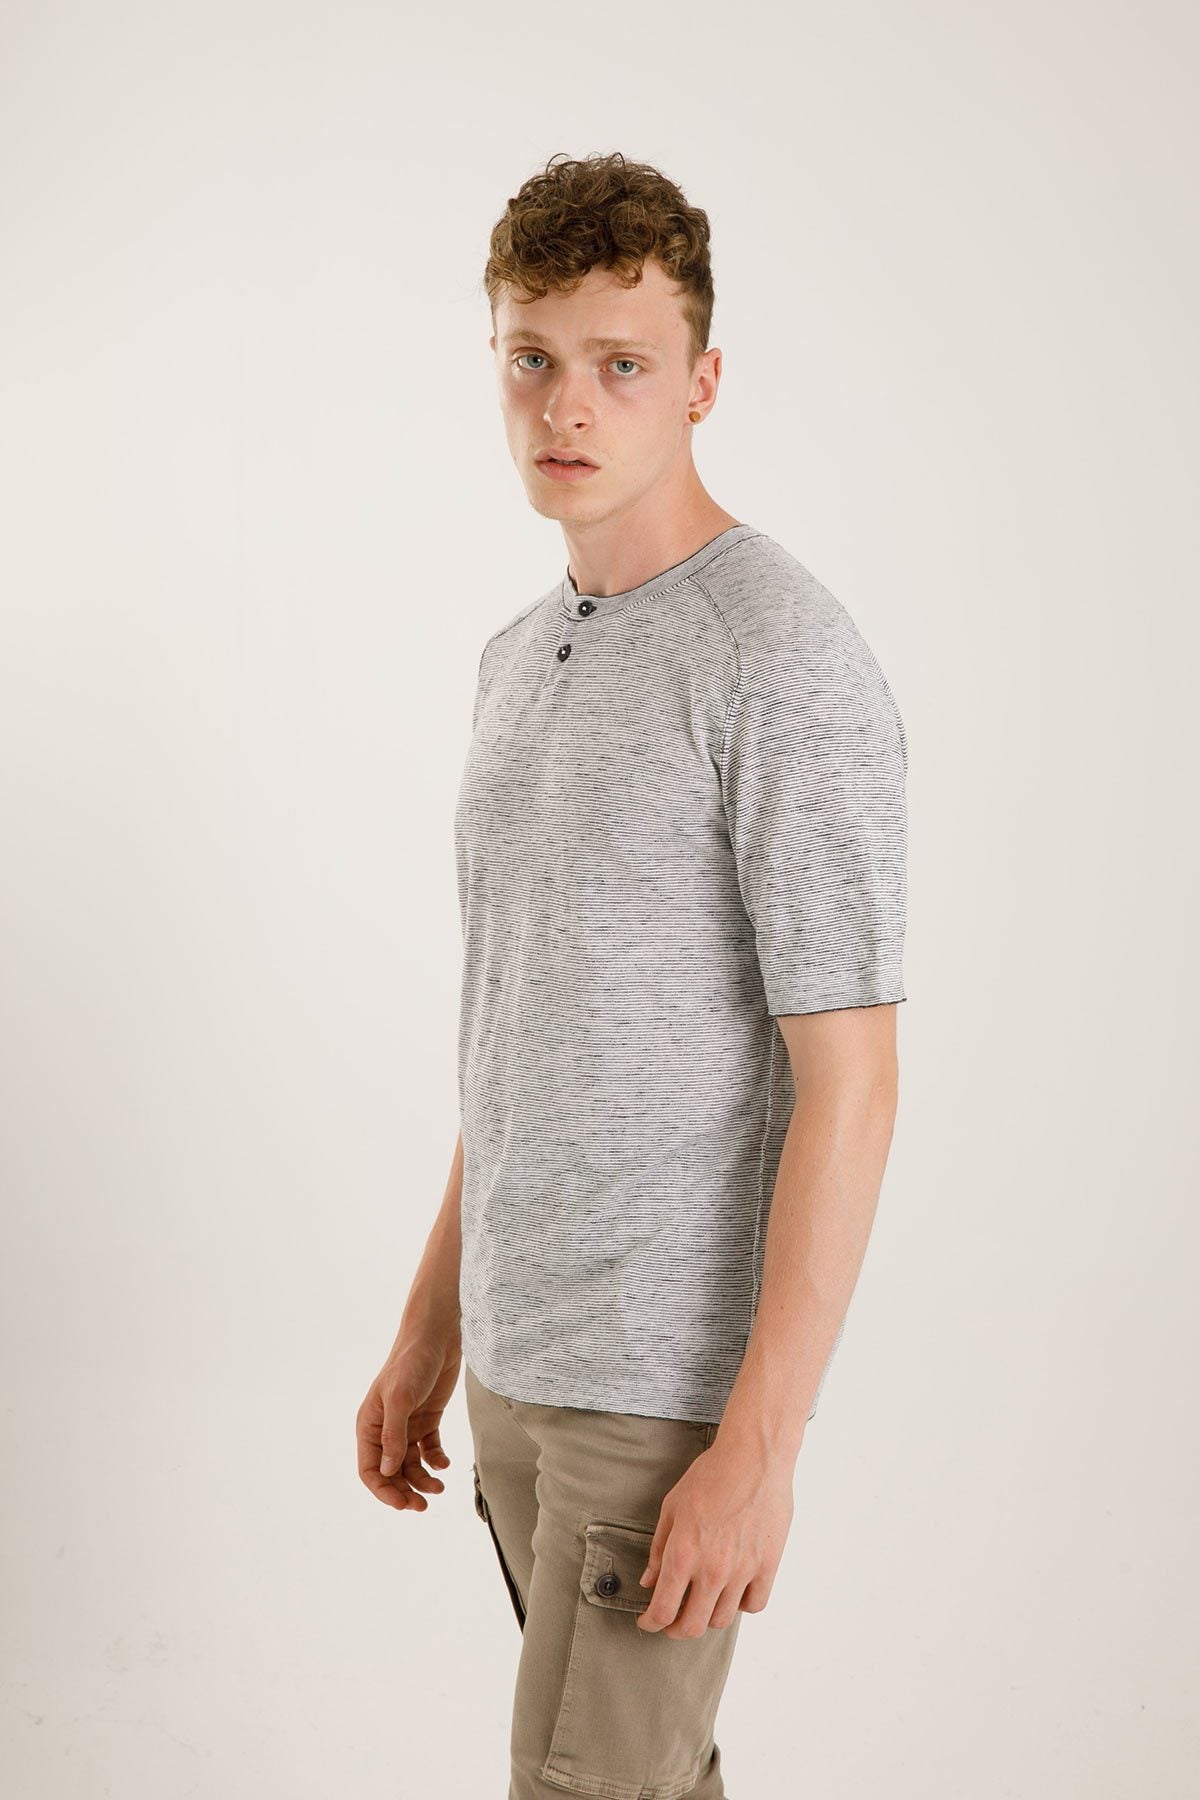 Transit İpek Karışımlı Düğmeli Yuvarlak Yaka T-shirt-Libas Trendy Fashion Store